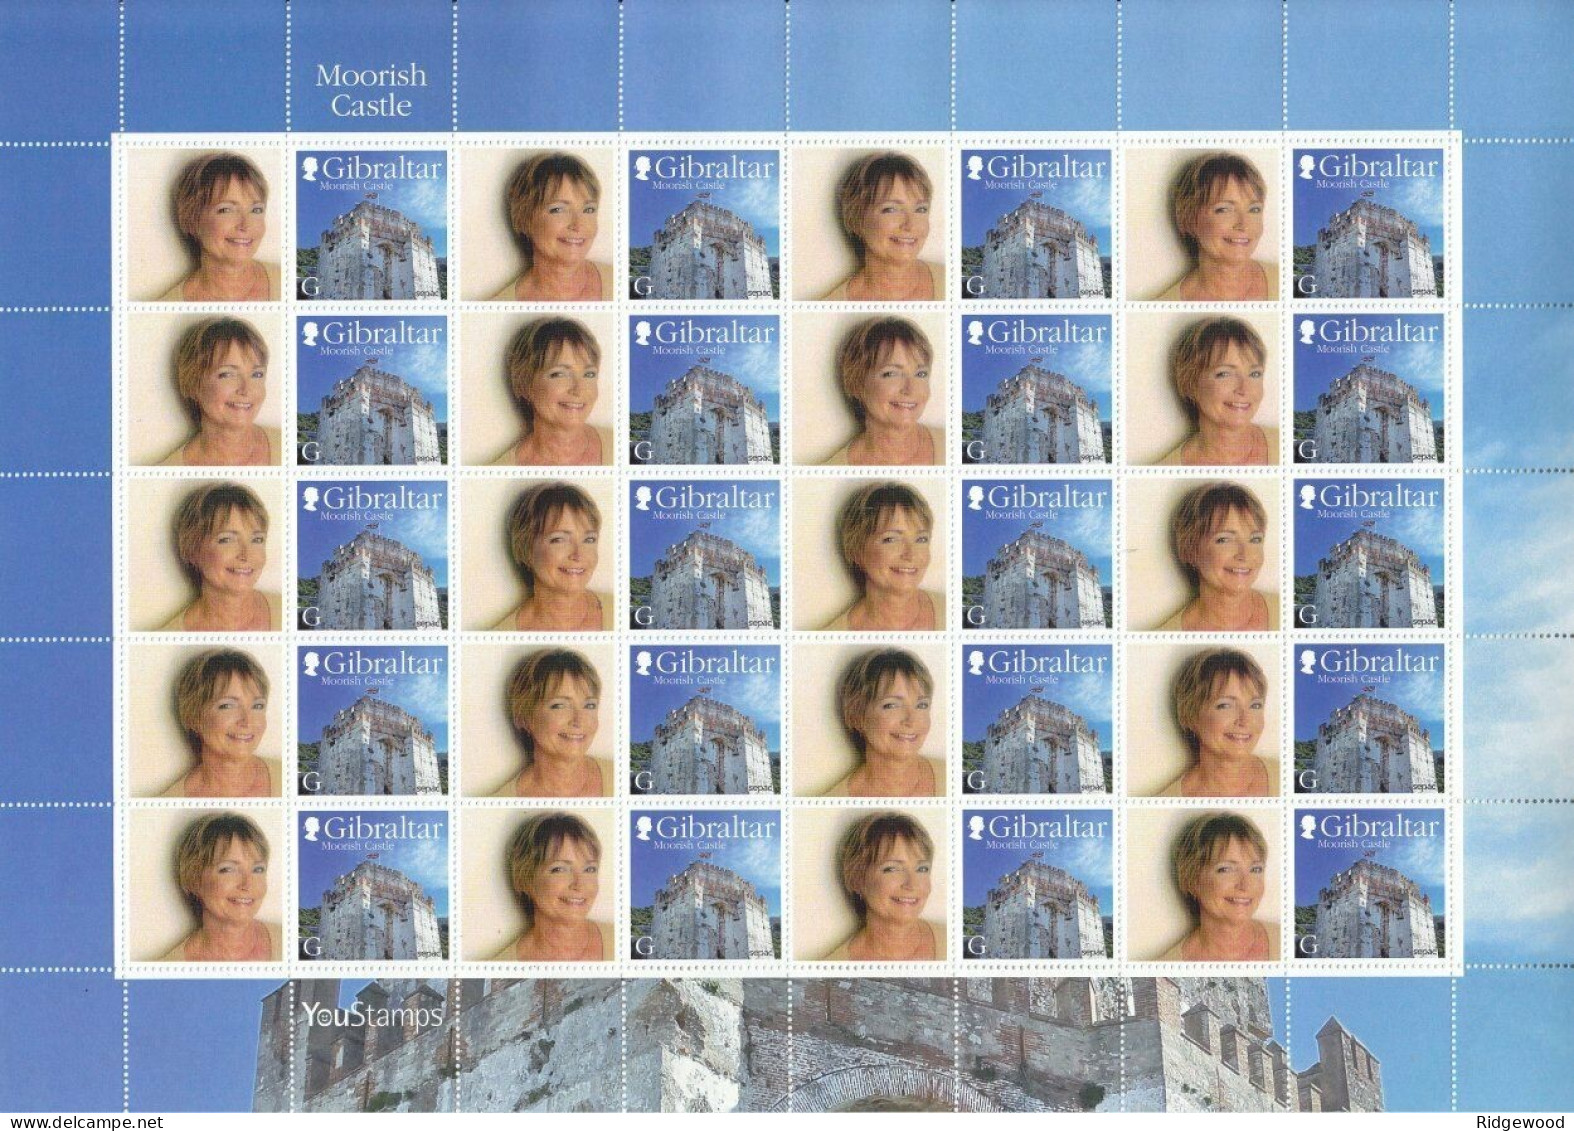 2015 Gibraltar - YouStamps© Stamp Sheet - Personalised "Moorish Castle" : 20 X G - MNH - Gibraltar